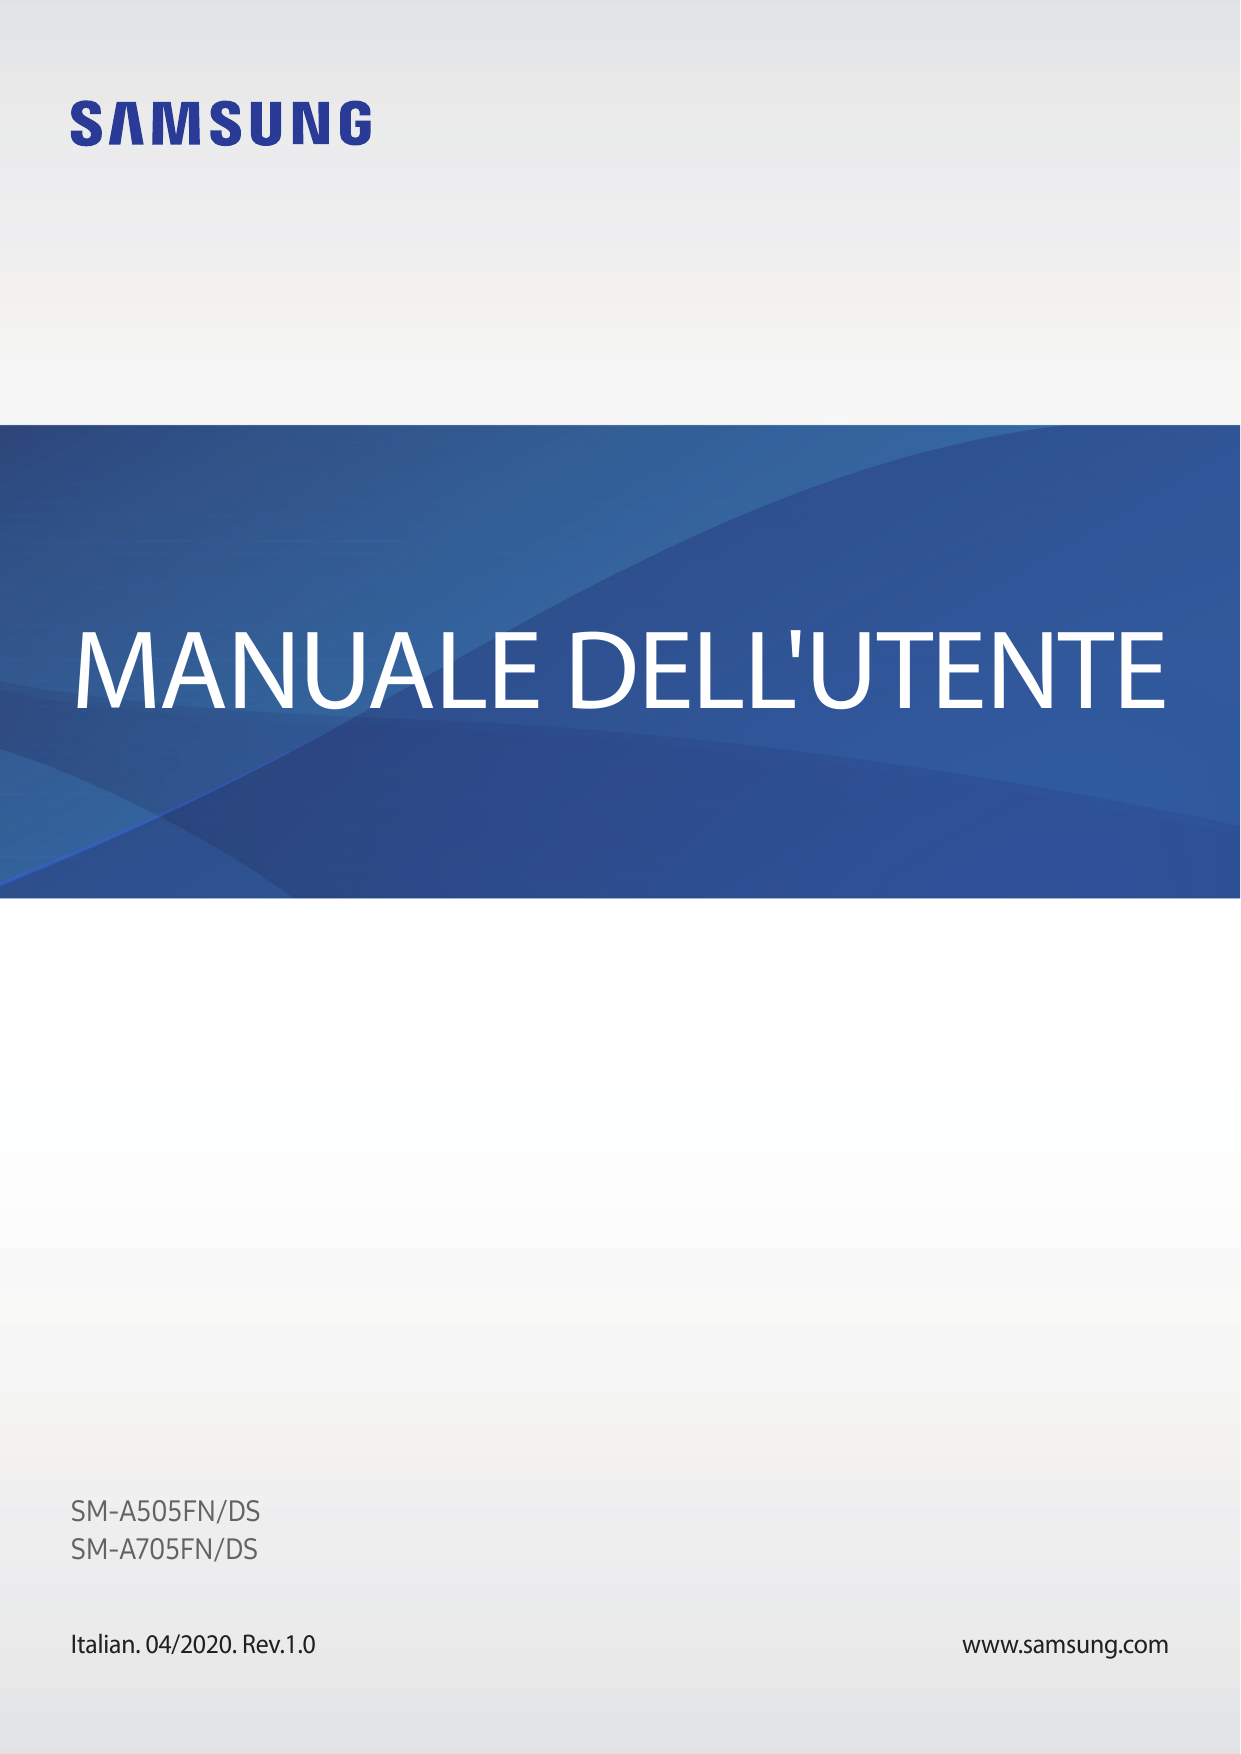 MANUALE DELL'UTENTESM-A505FN/DSSM-A705FN/DSItalian. 04/2020. Rev.1.0www.samsung.com